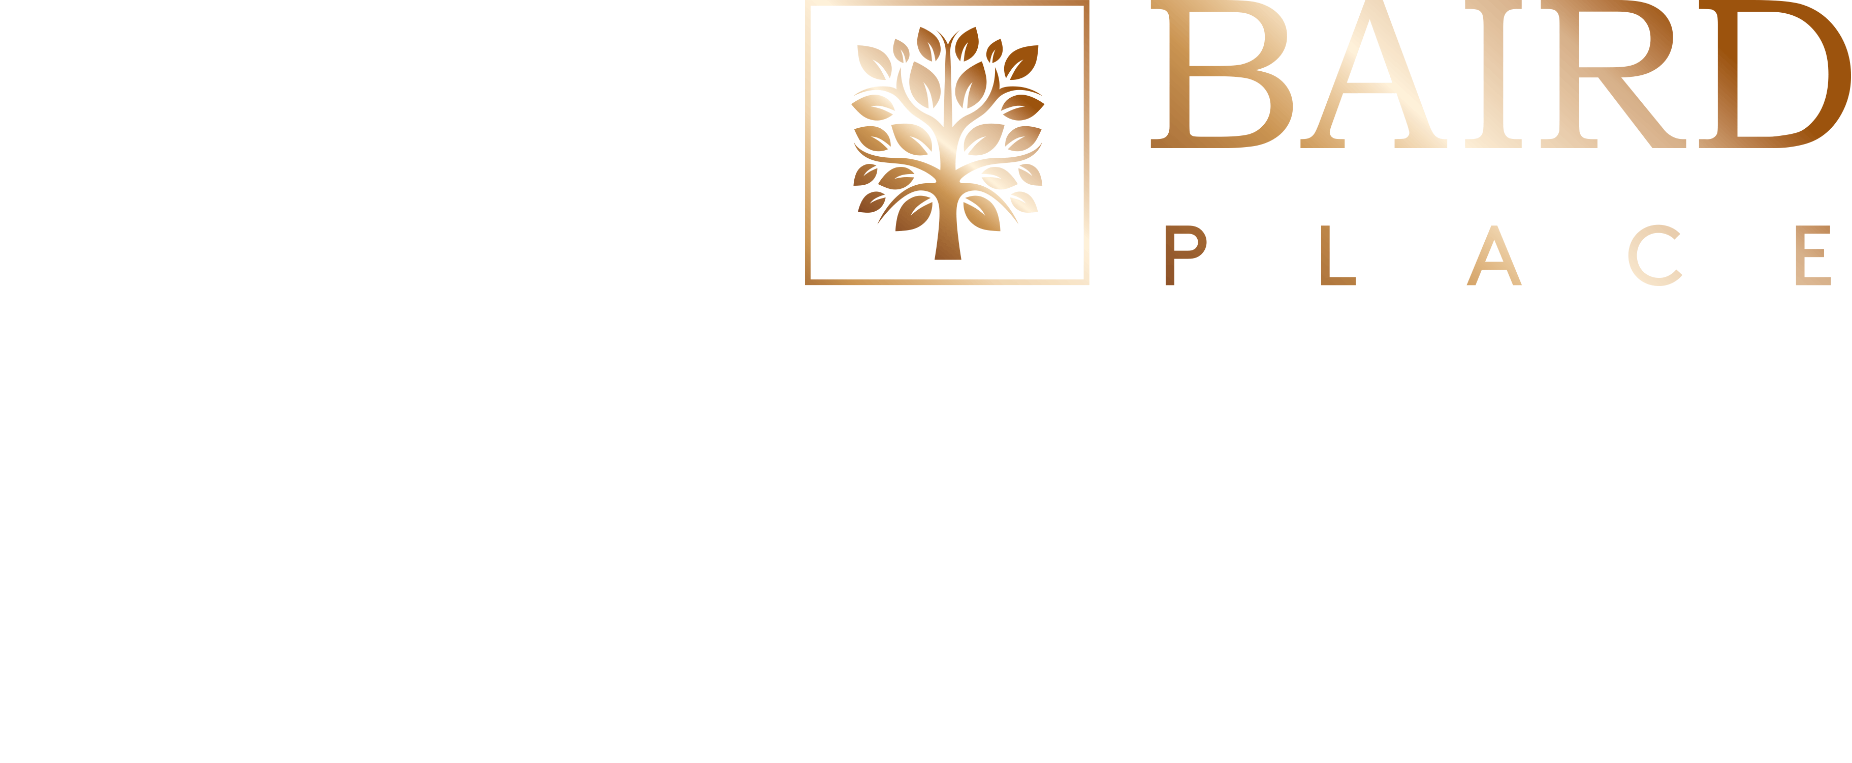 Baird Place, Hastings - New Homes | Orbit Homes | Gemselect Logo